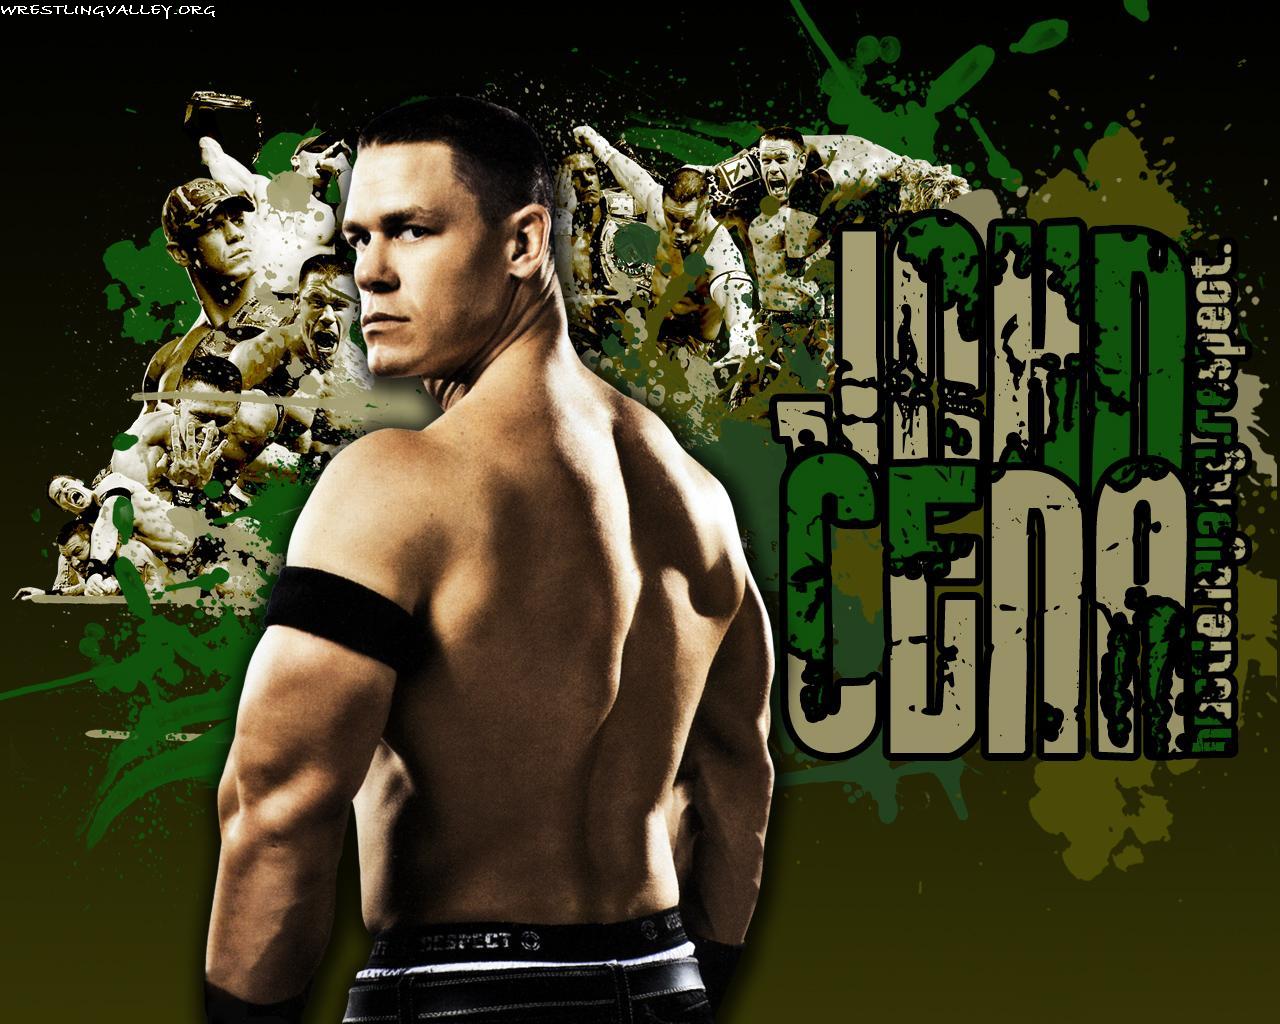 John Cena Wwe Fast Lane Superstars And Wallpaper